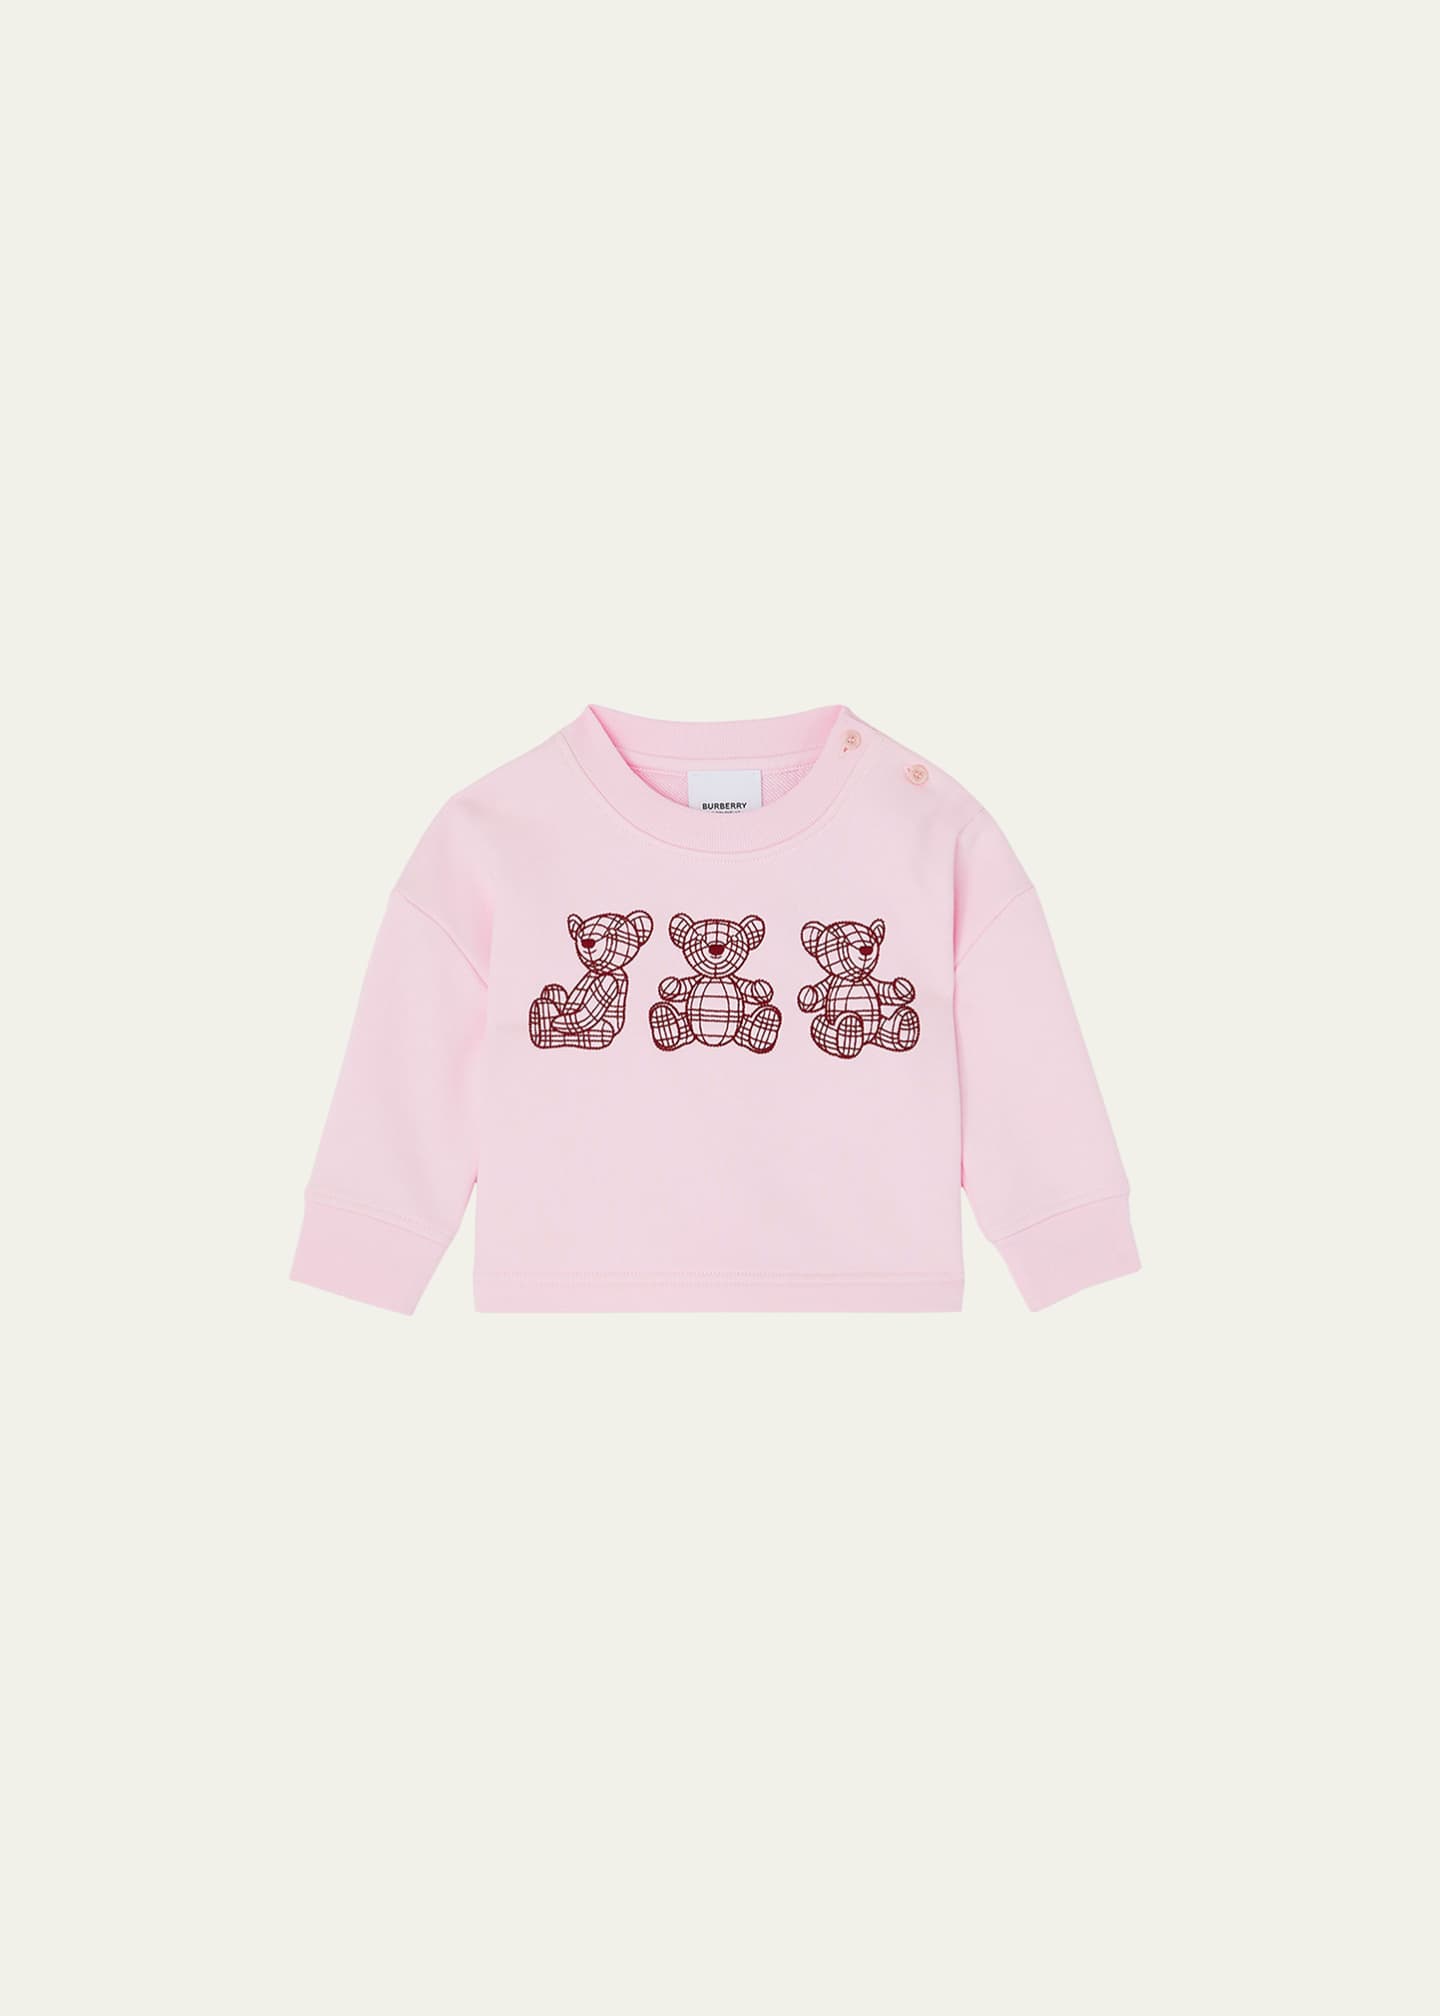 Burberry Girl's Embroidered Bears T-Shirt, Size 6M-2 - Bergdorf Goodman